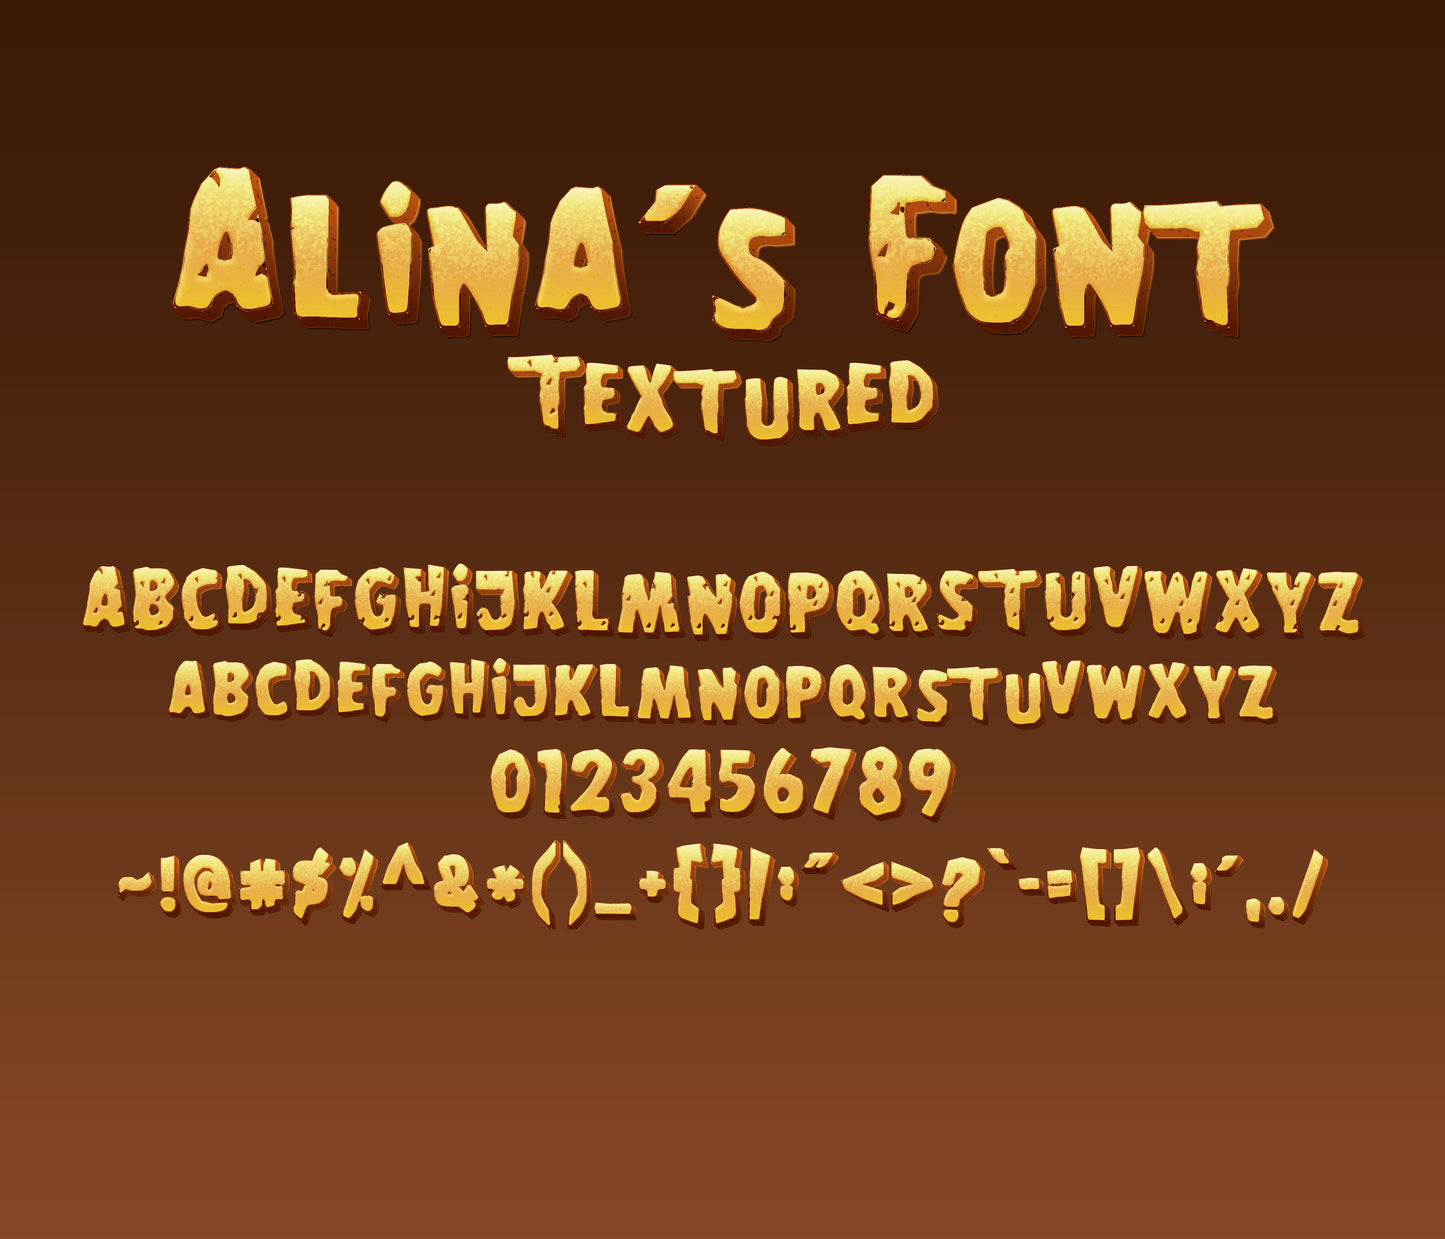 Flintstones Stone Age Textured Font